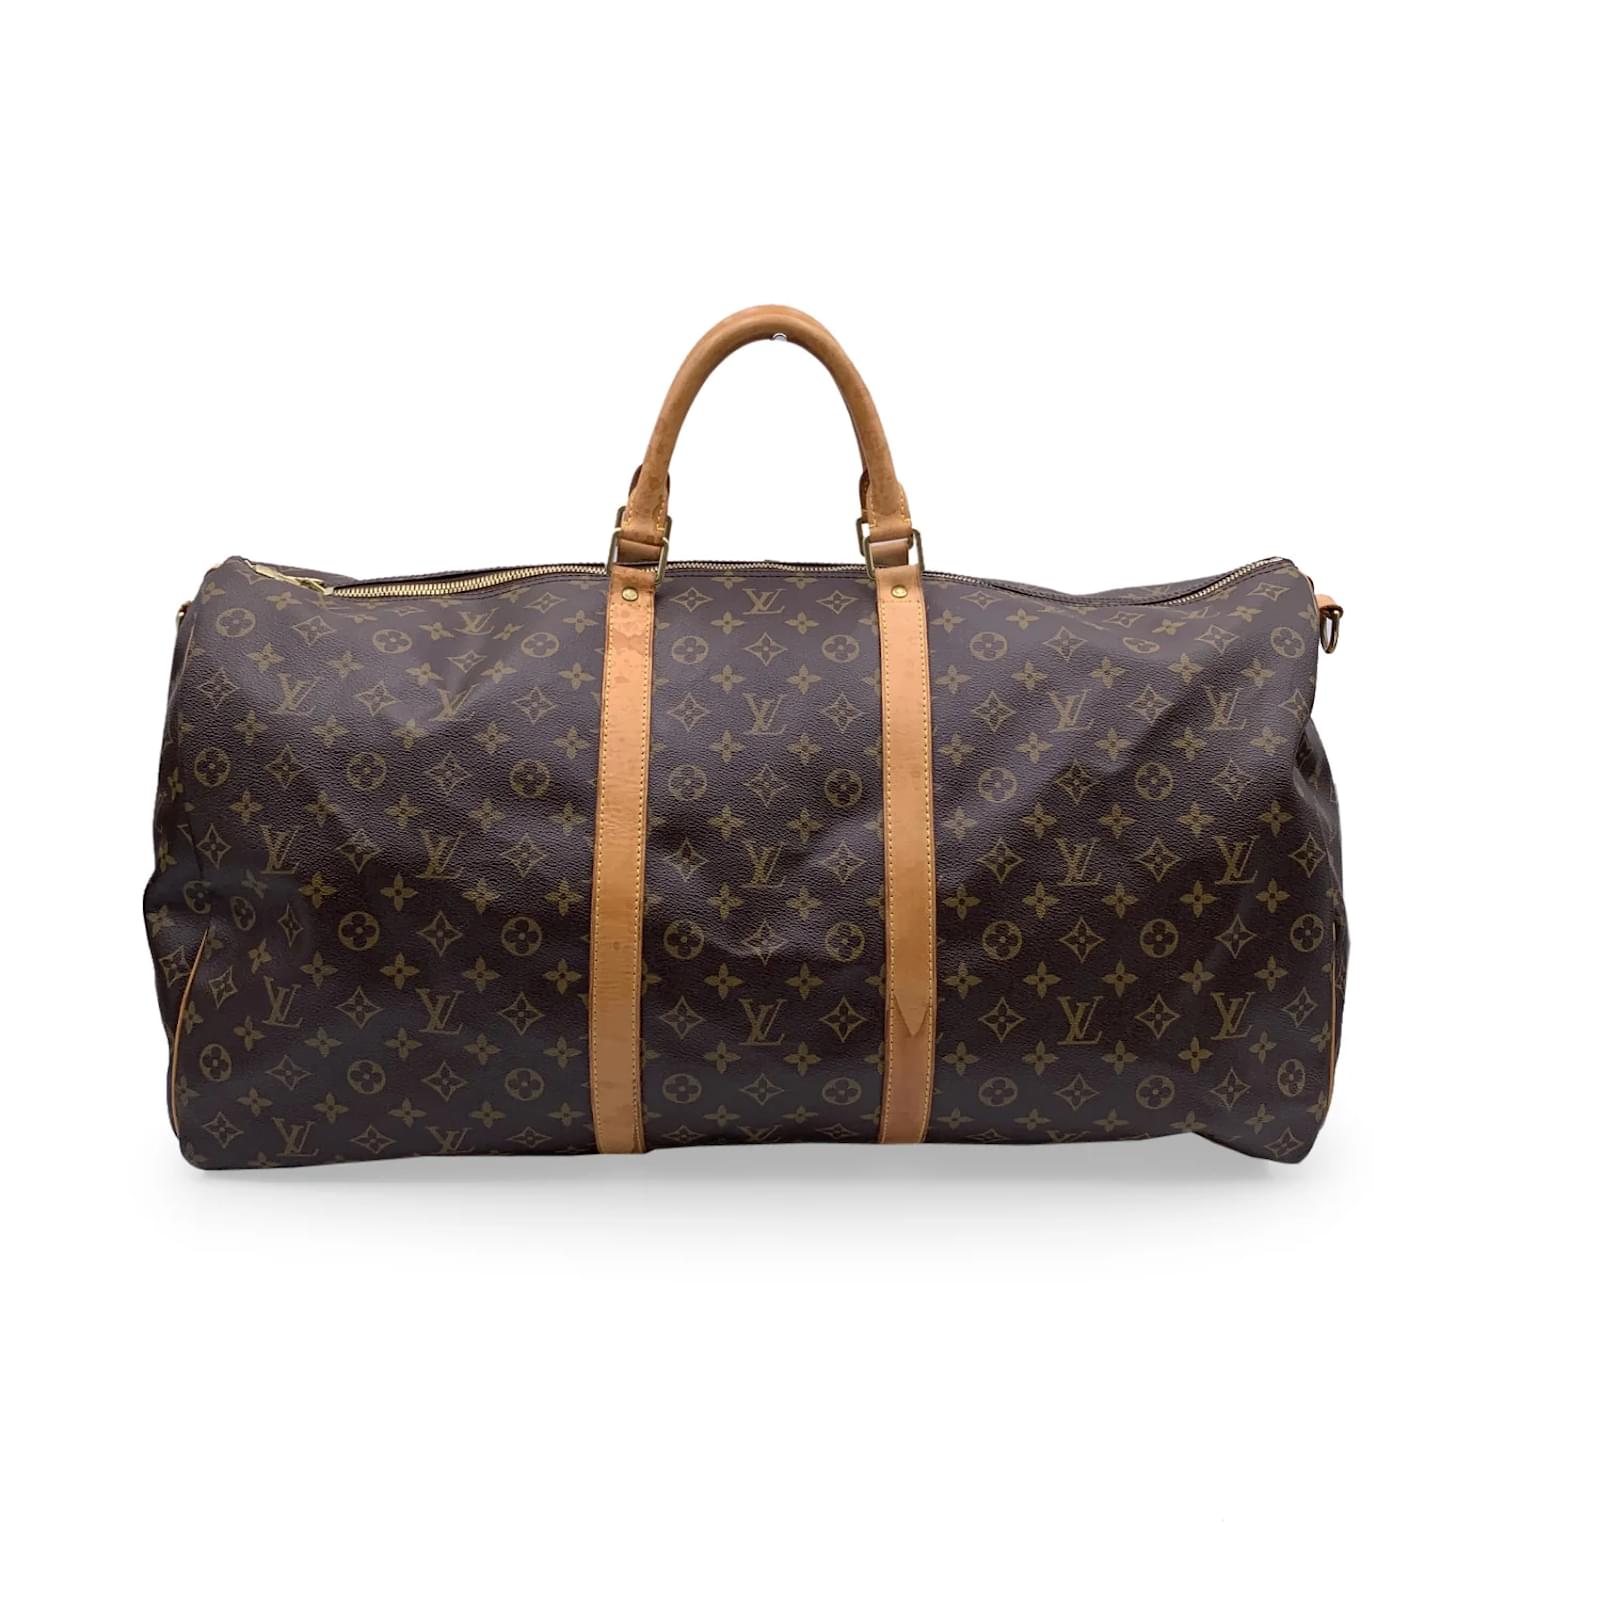 Louis Vuitton Large Monogram Duffle Bag